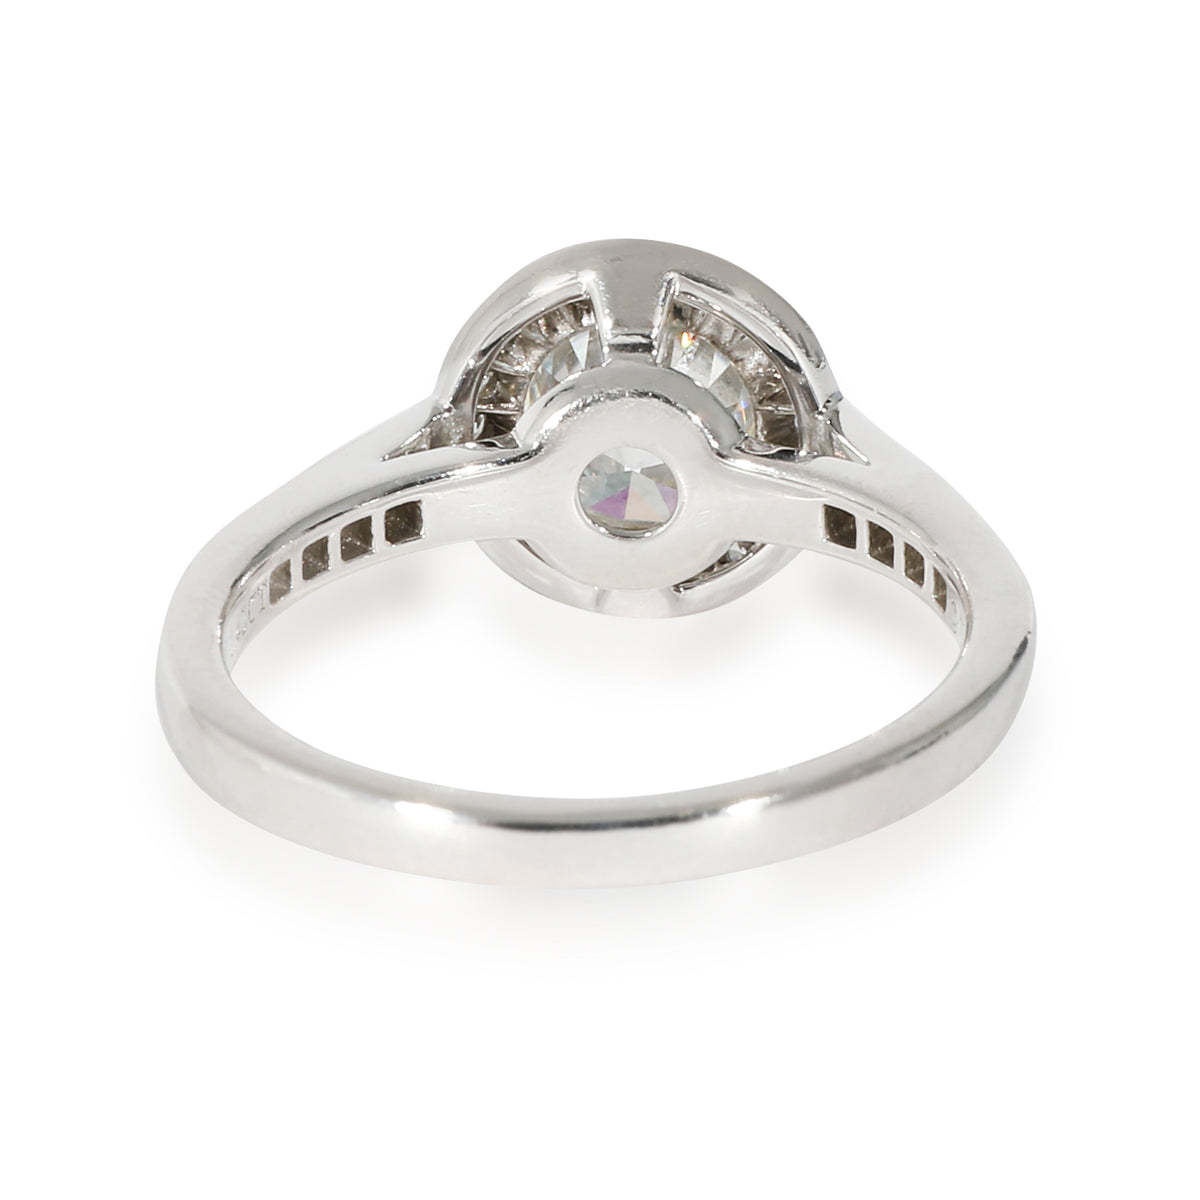 Halo Engagement Ring in Platinum G VVS2 1.66 CTW